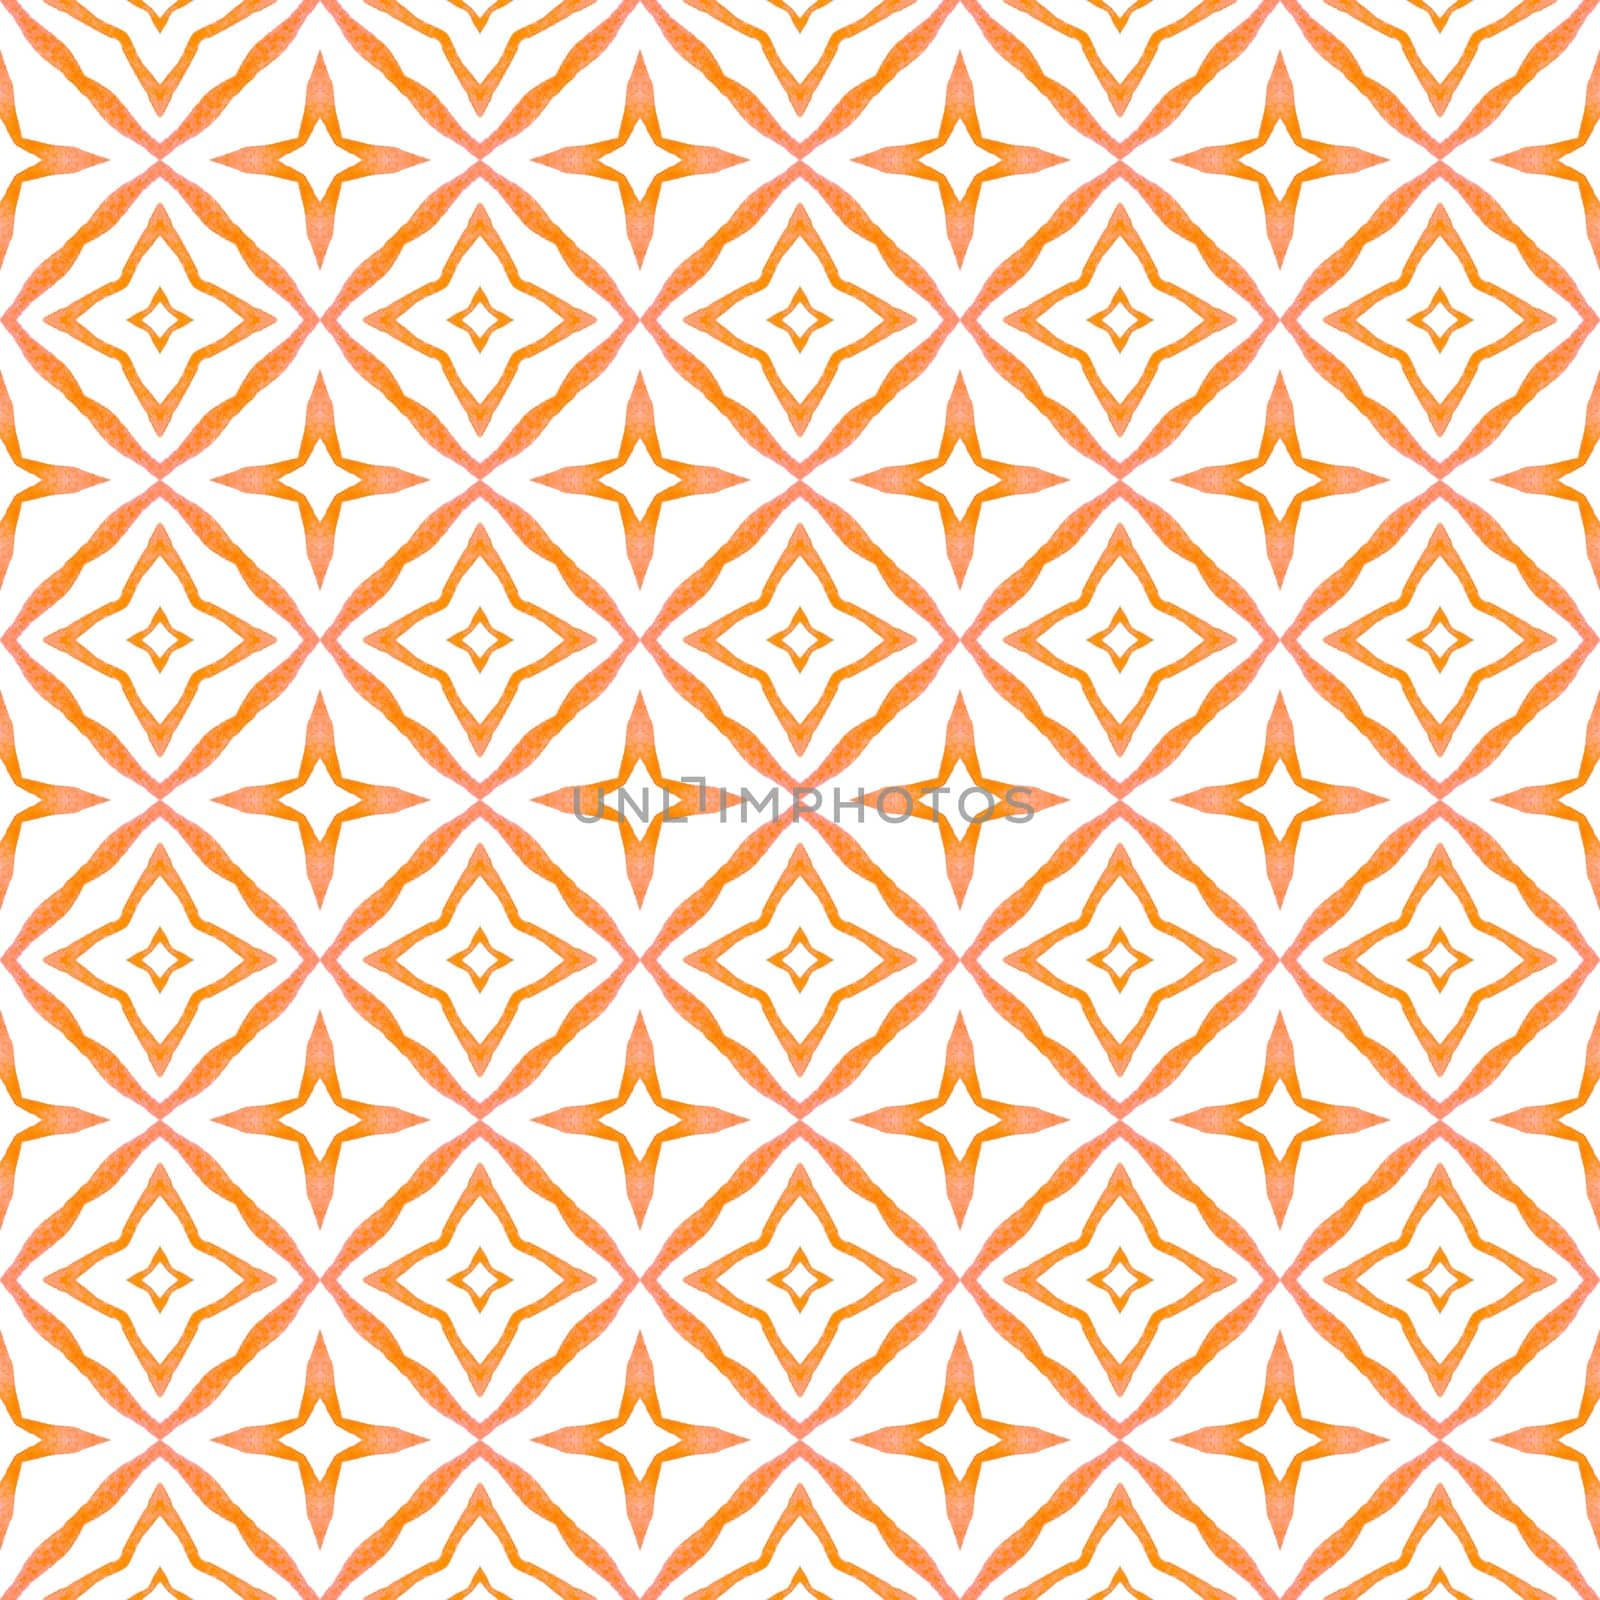 Tiled watercolor background. Orange fancy boho by beginagain